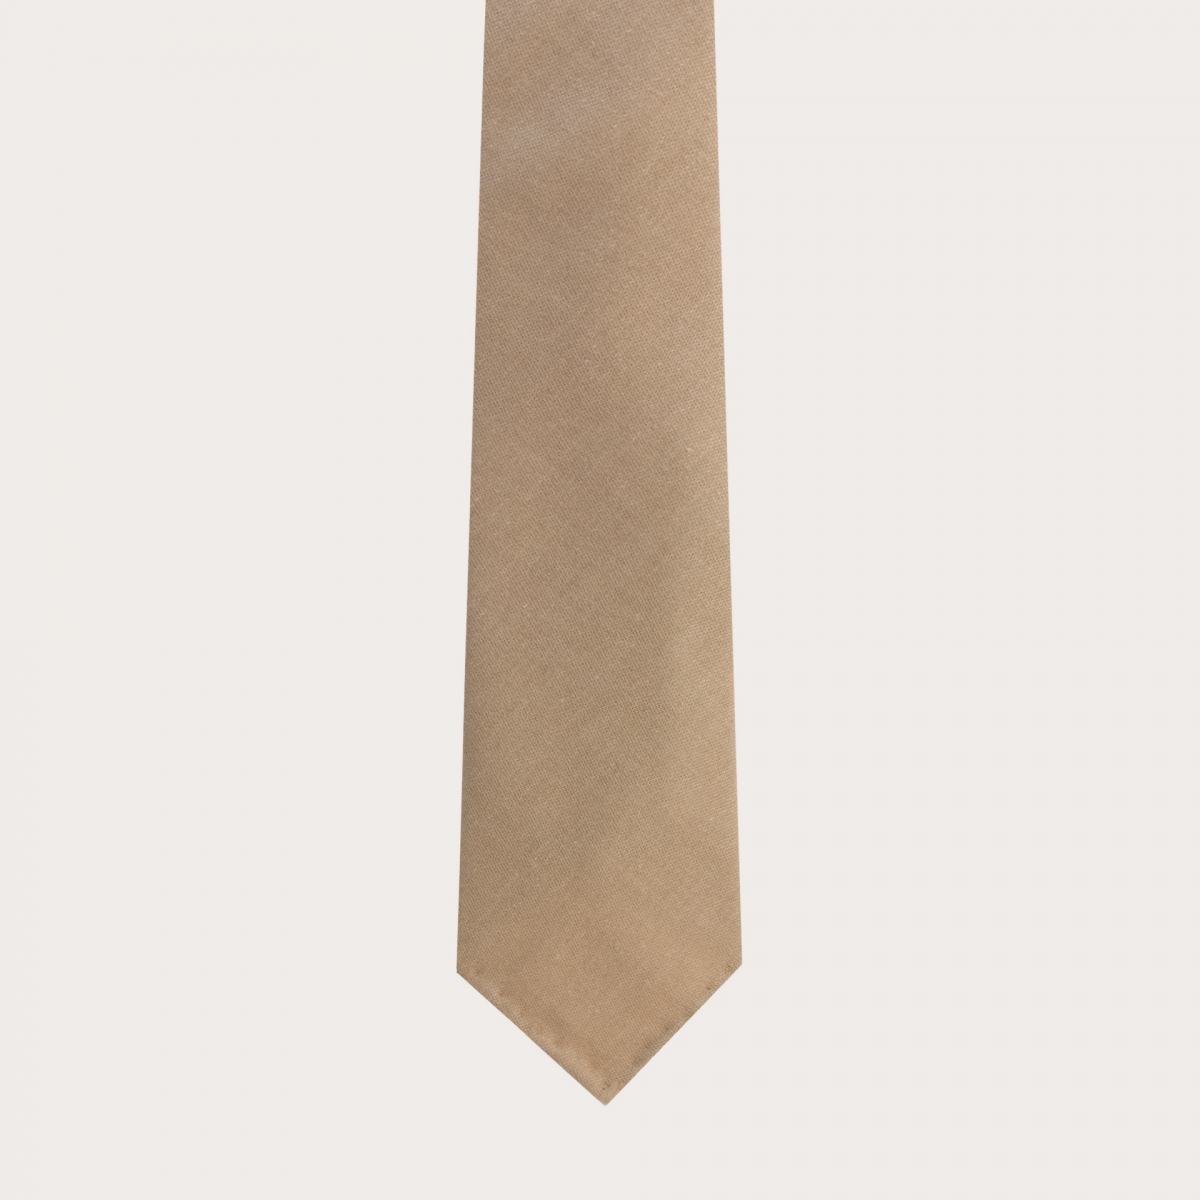 BRUCLE Ungefütterte Krawatte beige made in italy